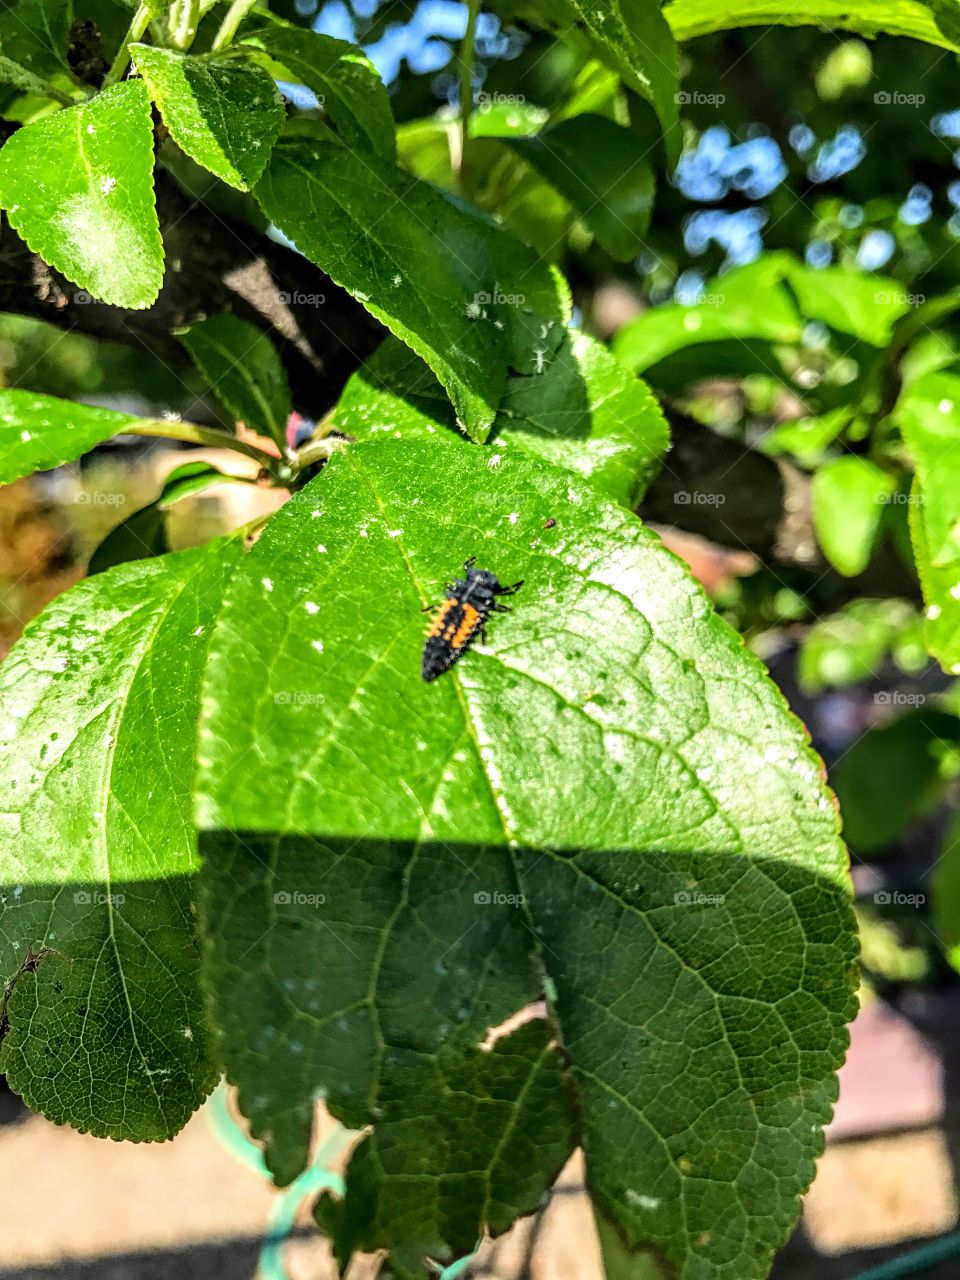 Bug on a leaf 